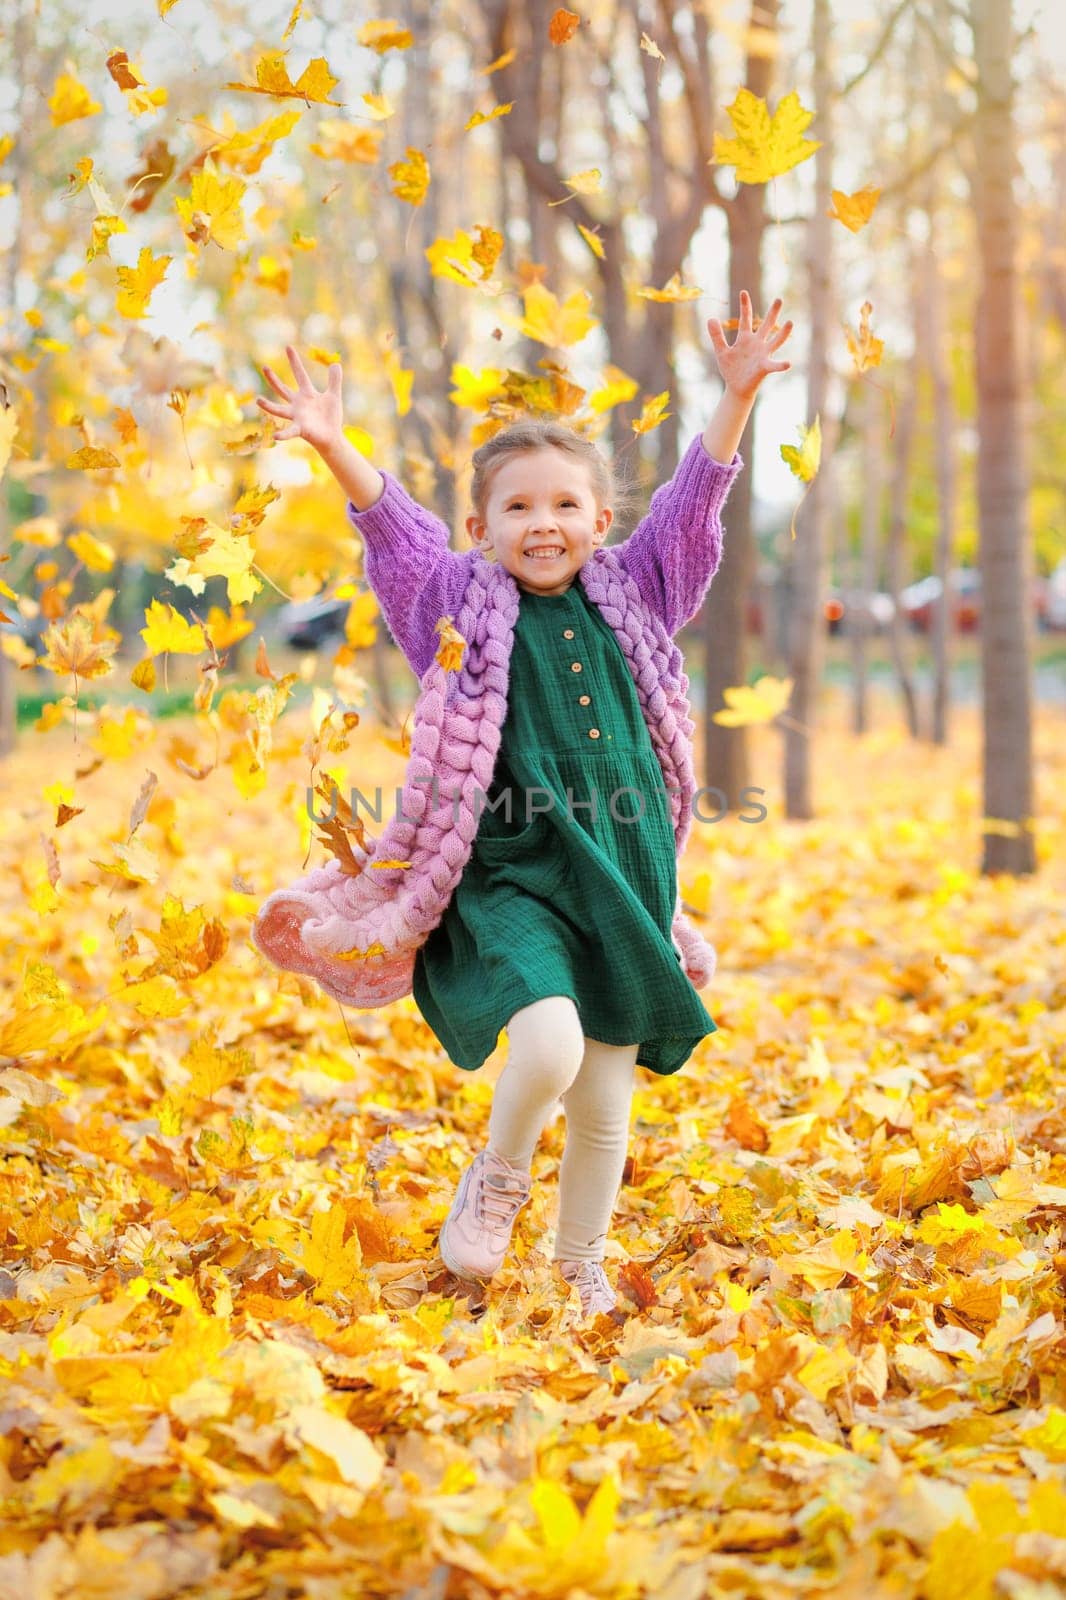 Joyful laughing caucasian girl 5 y.o. having fun in autumn park throws up fallen leaves by Rom4ek